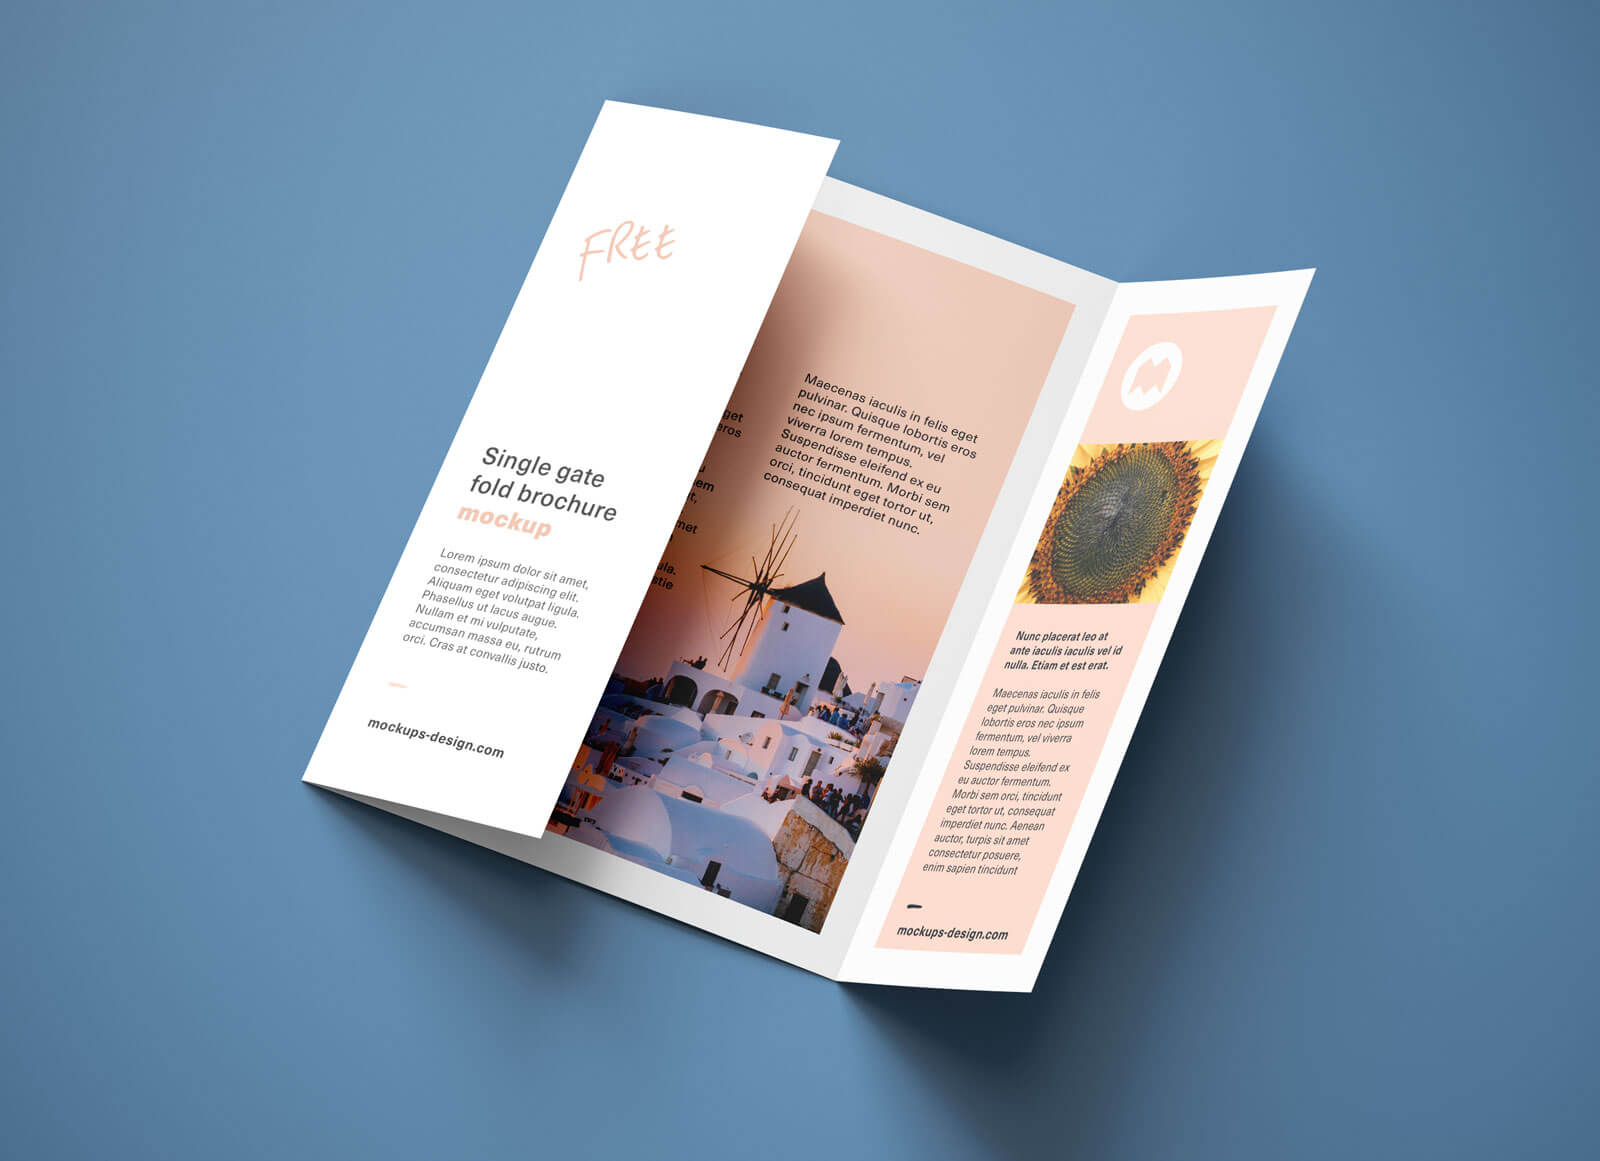 Free A4 Single Gate Fold Brochure Mockup Psd Set – Good Mockups Inside Single Page Brochure Templates Psd